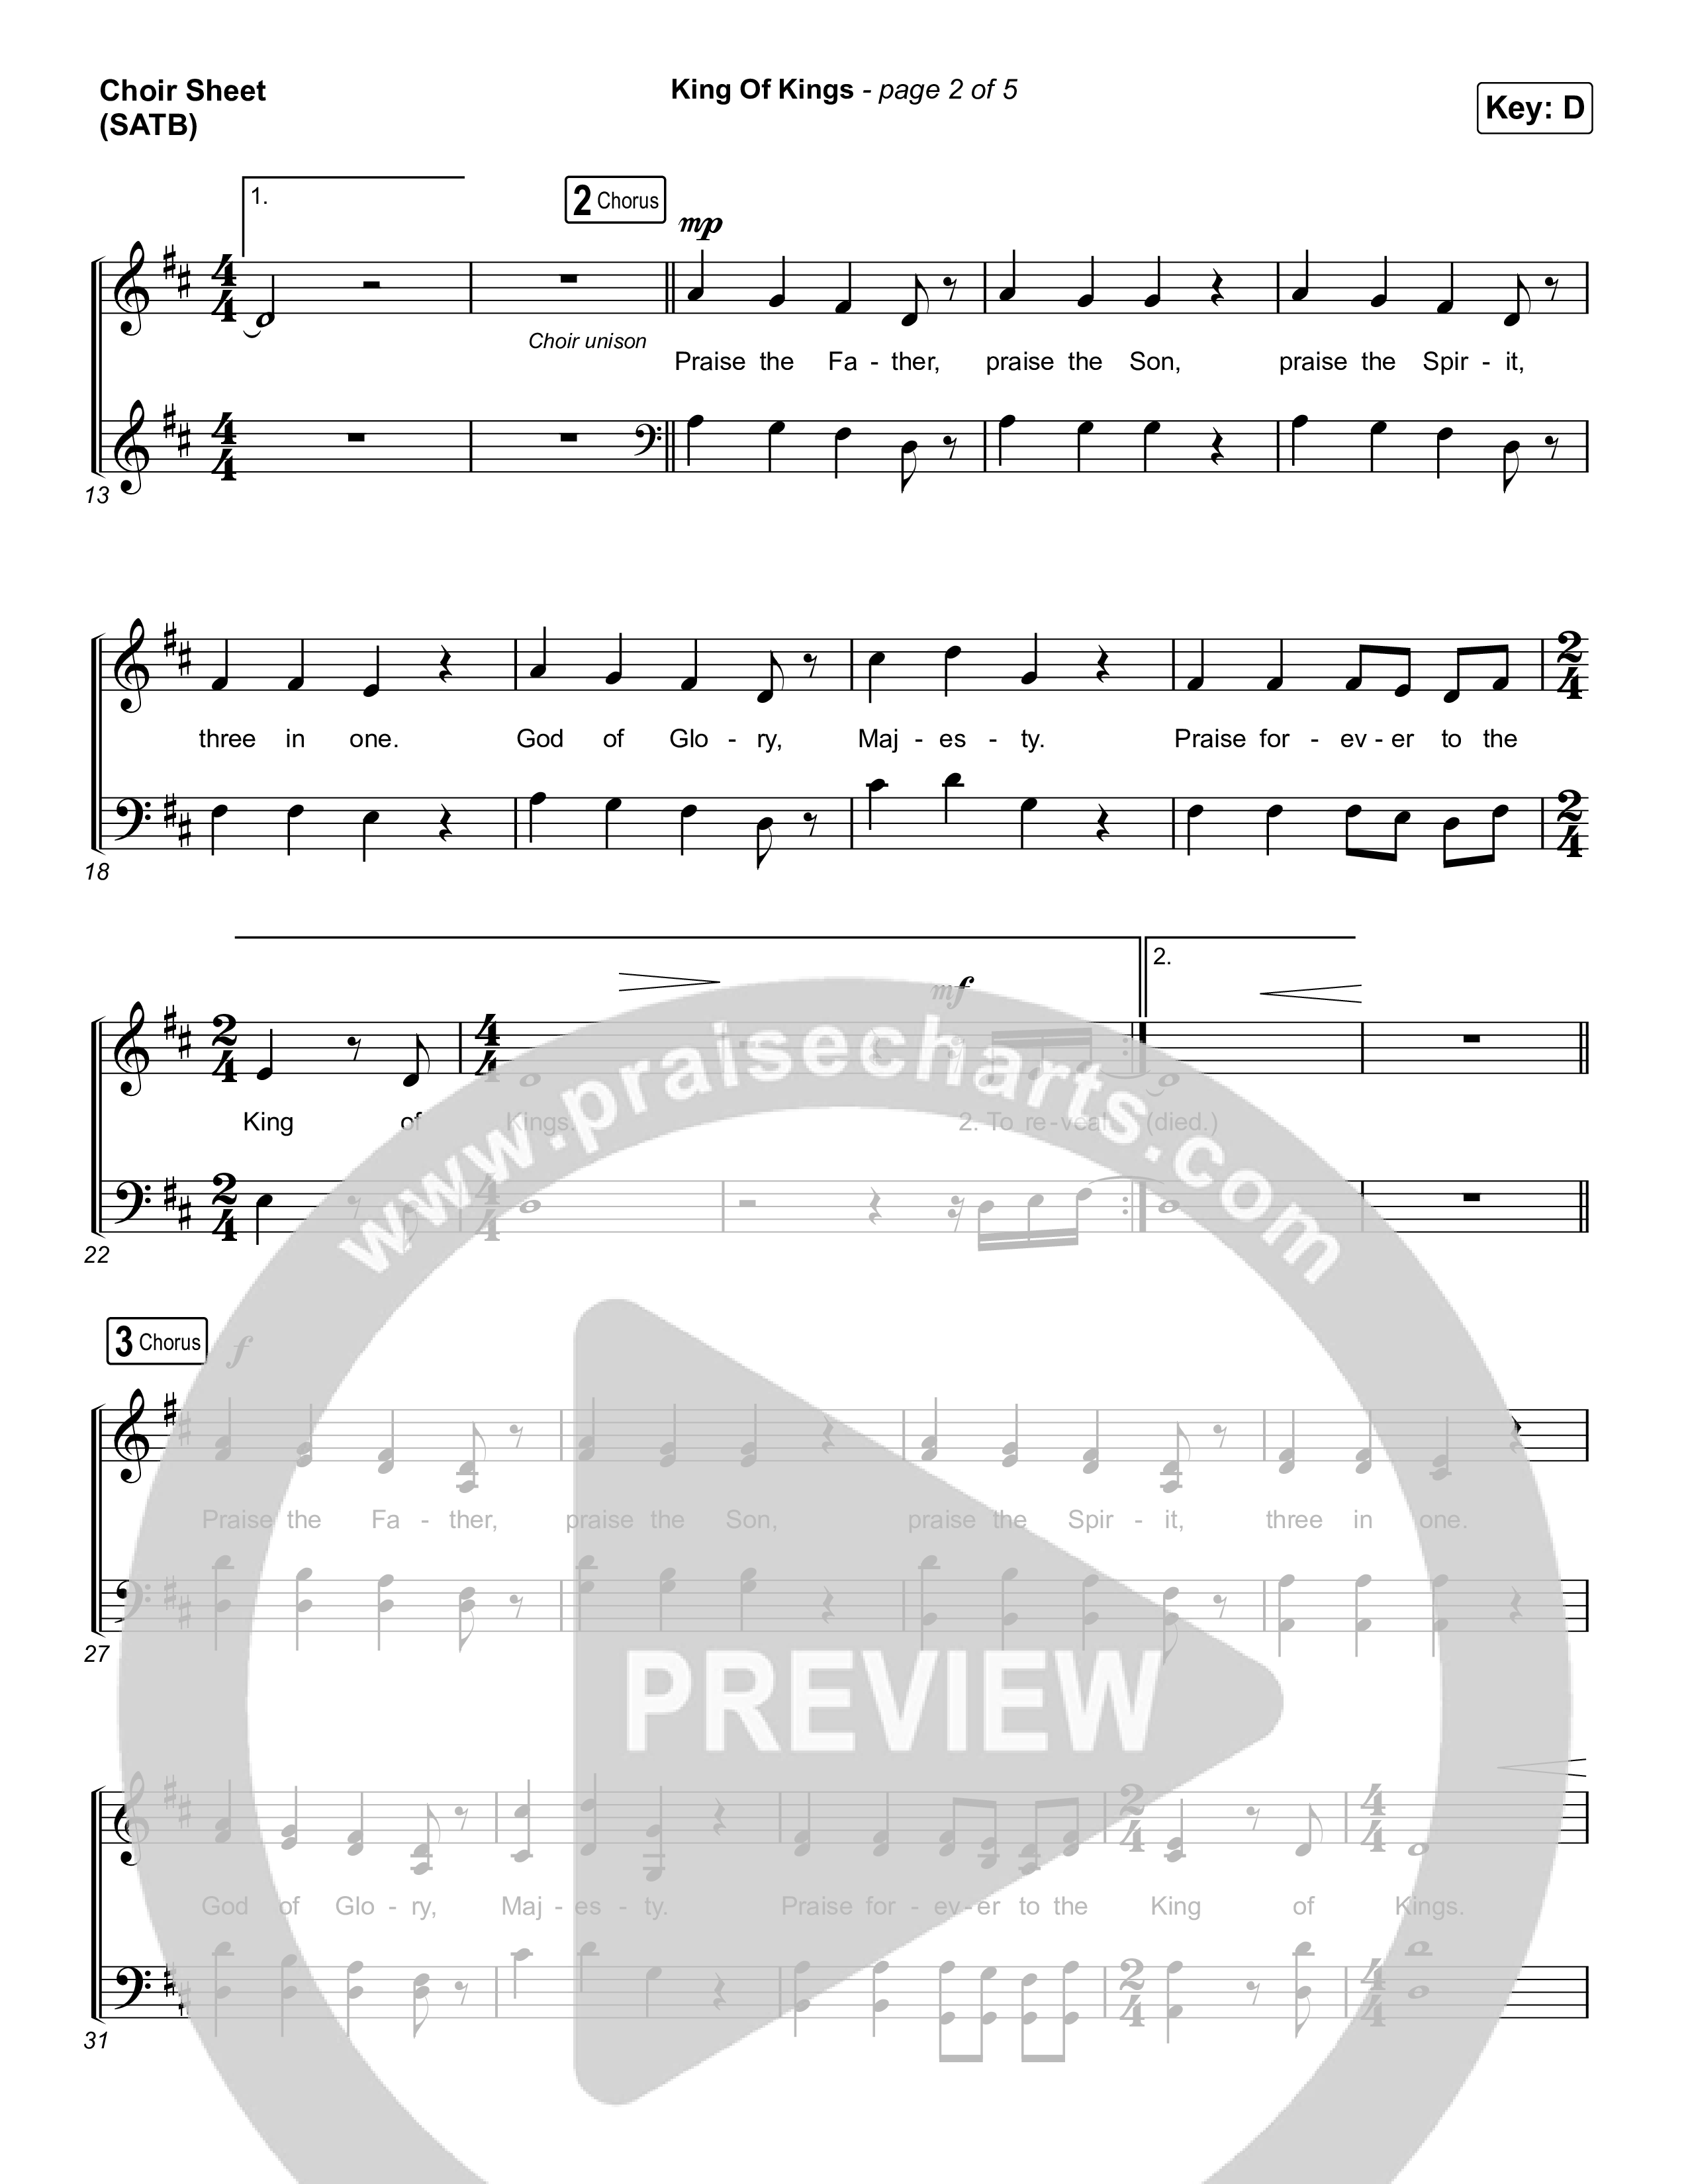 King Of Kings (Choral Anthem SATB) Choir Sheet (SATB) (Hillsong Worship / Arr. Cliff Duren / Mason Brown)